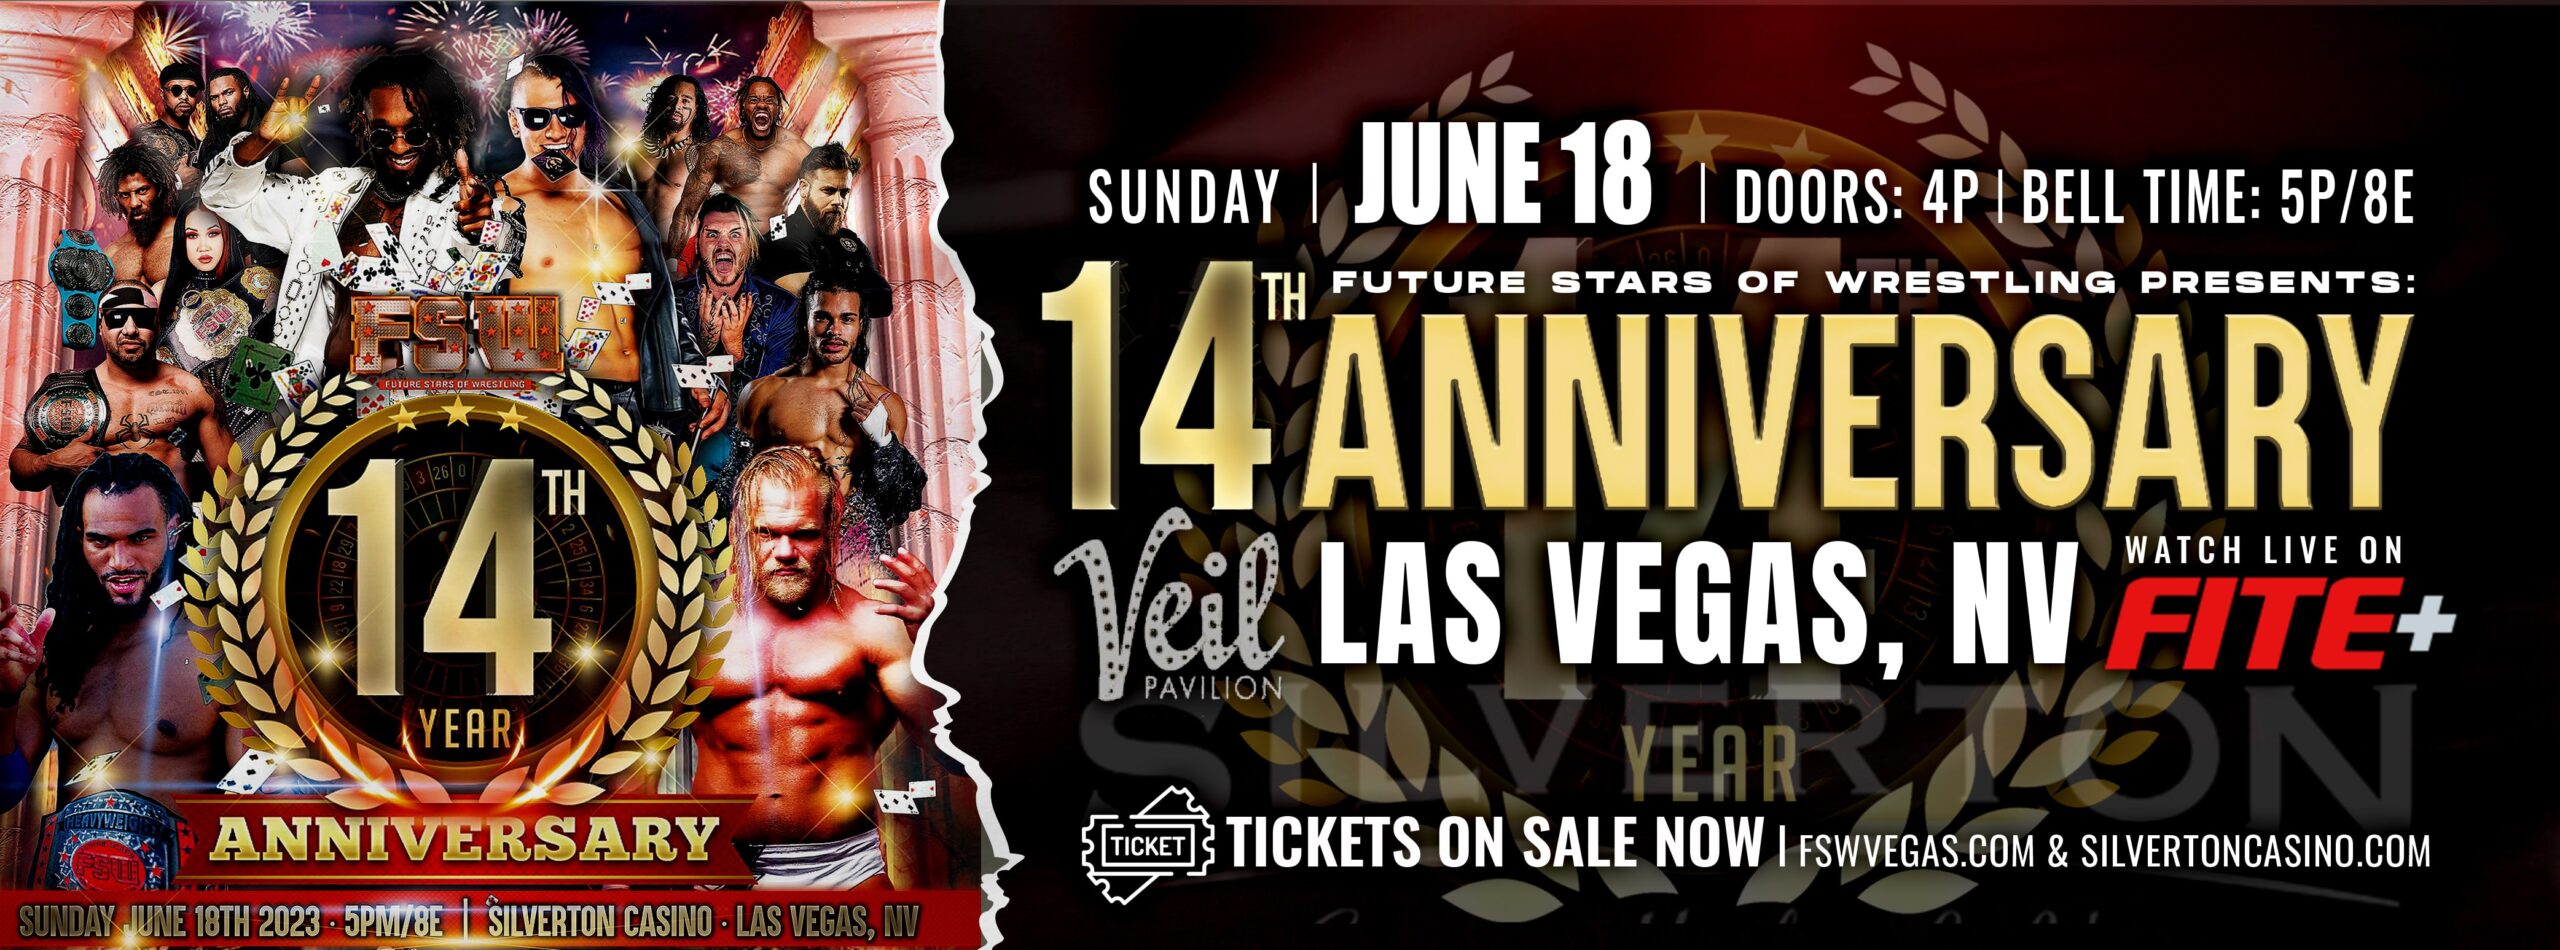 FSW 14 Year Anniversary June 18 2023 Veil Pavillion Silverton Casino & Resort Las Vegas NV